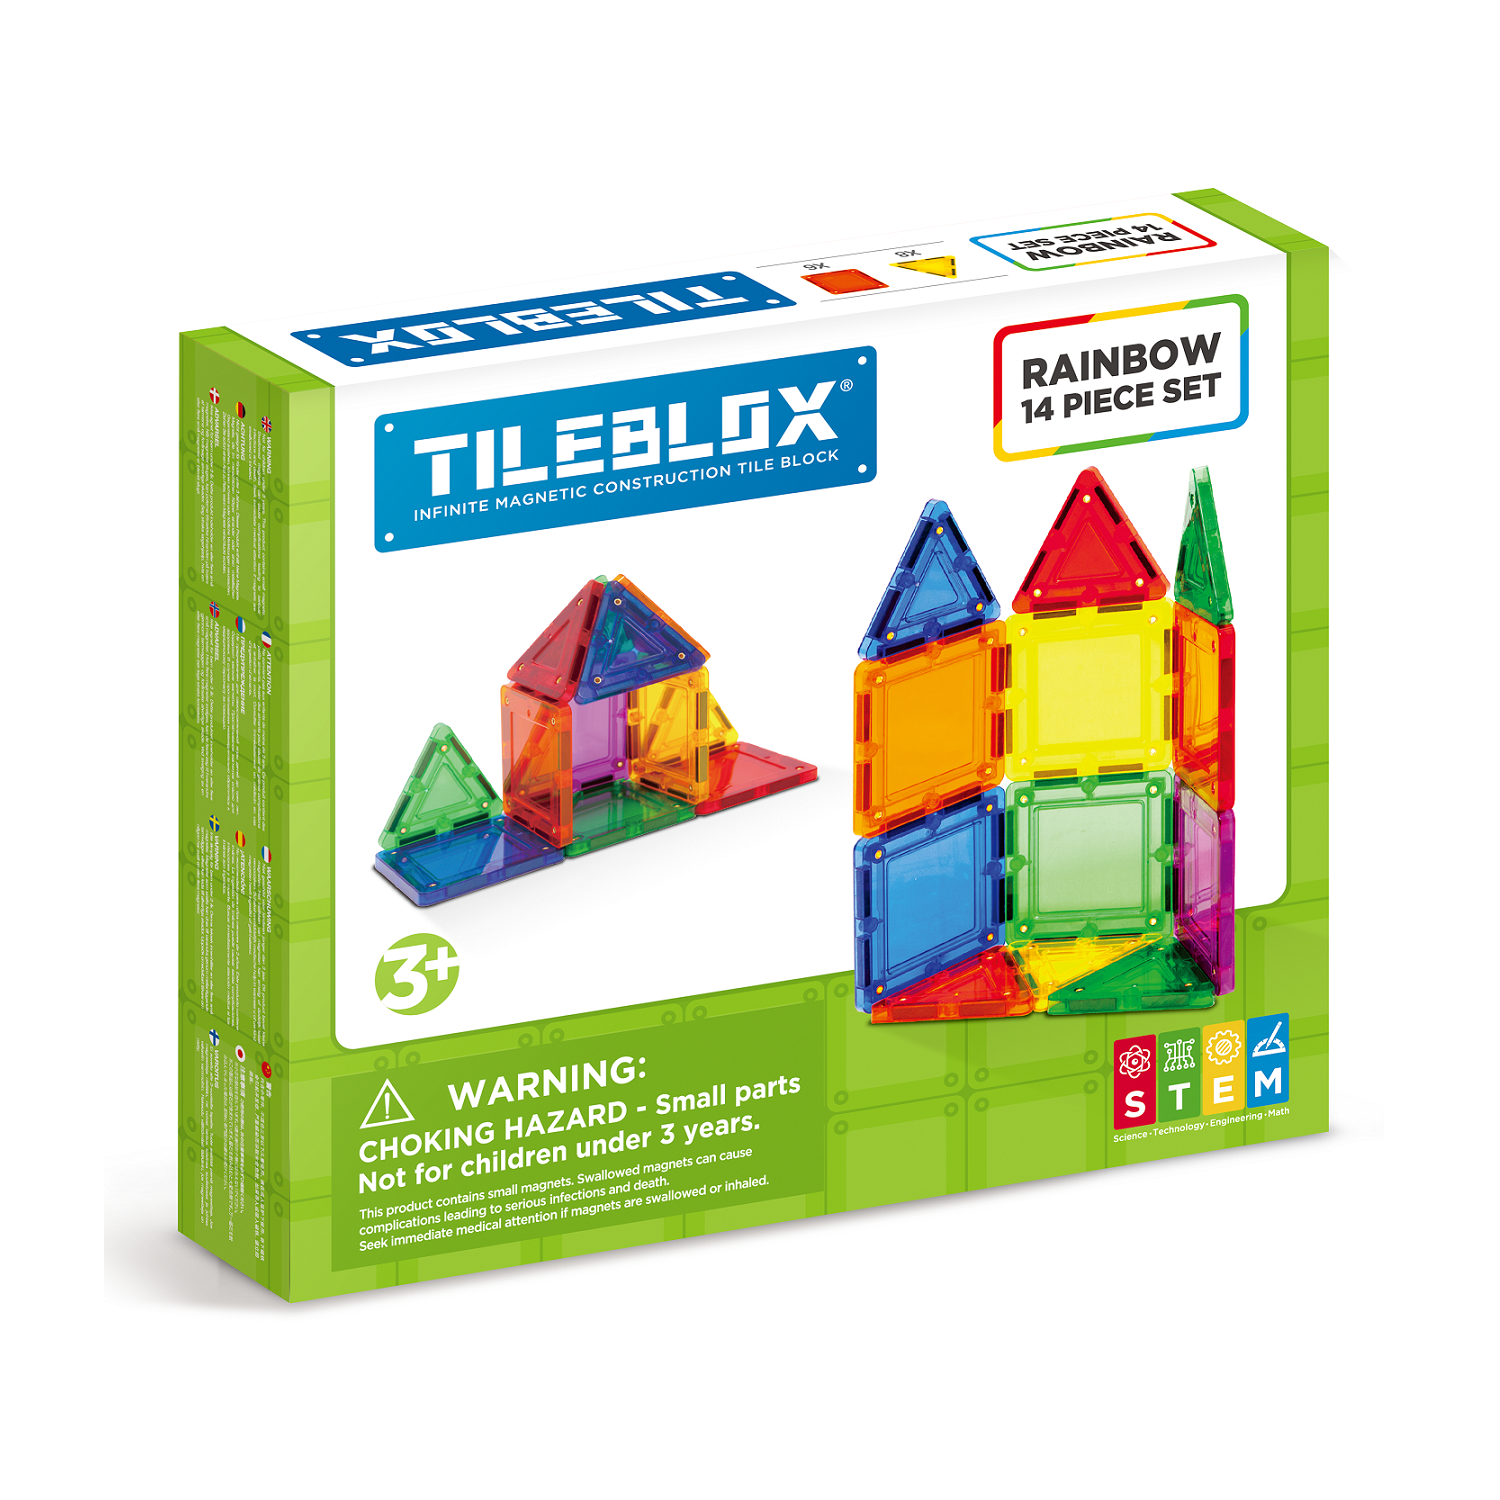 TILEBLOX Rainbow 14pc Set magnetic tiles by Magformers 1030001